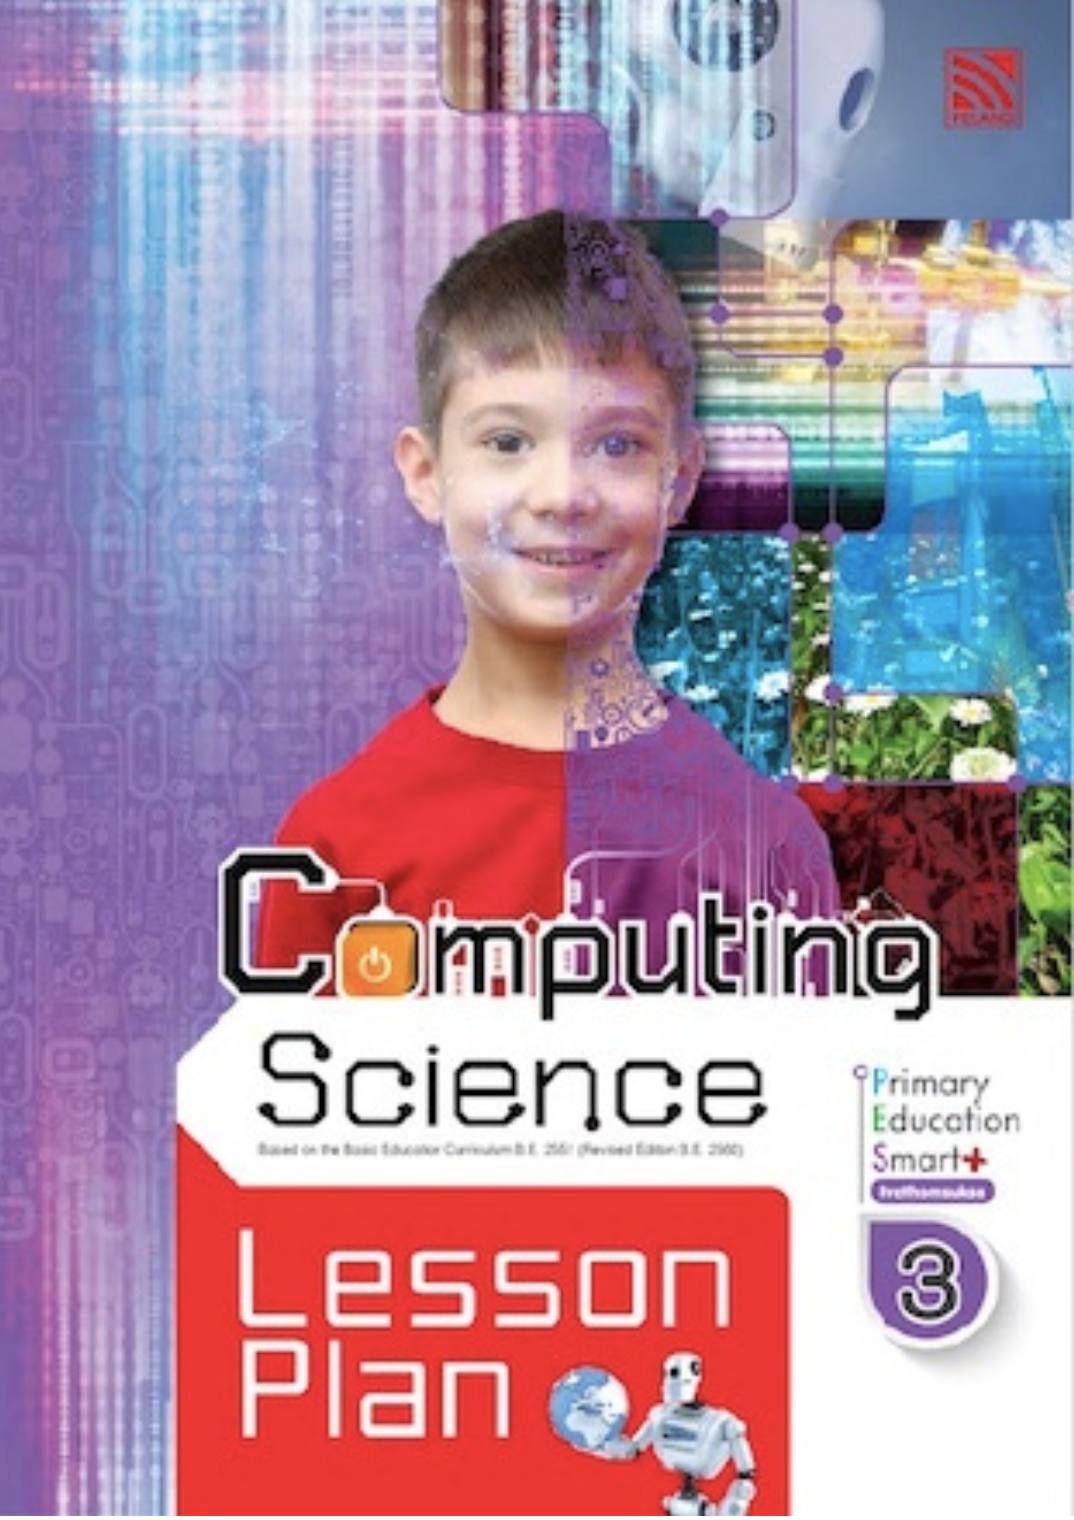 Pelangi Primary Education Smart Plus Computing Science P3 Lesson Plan